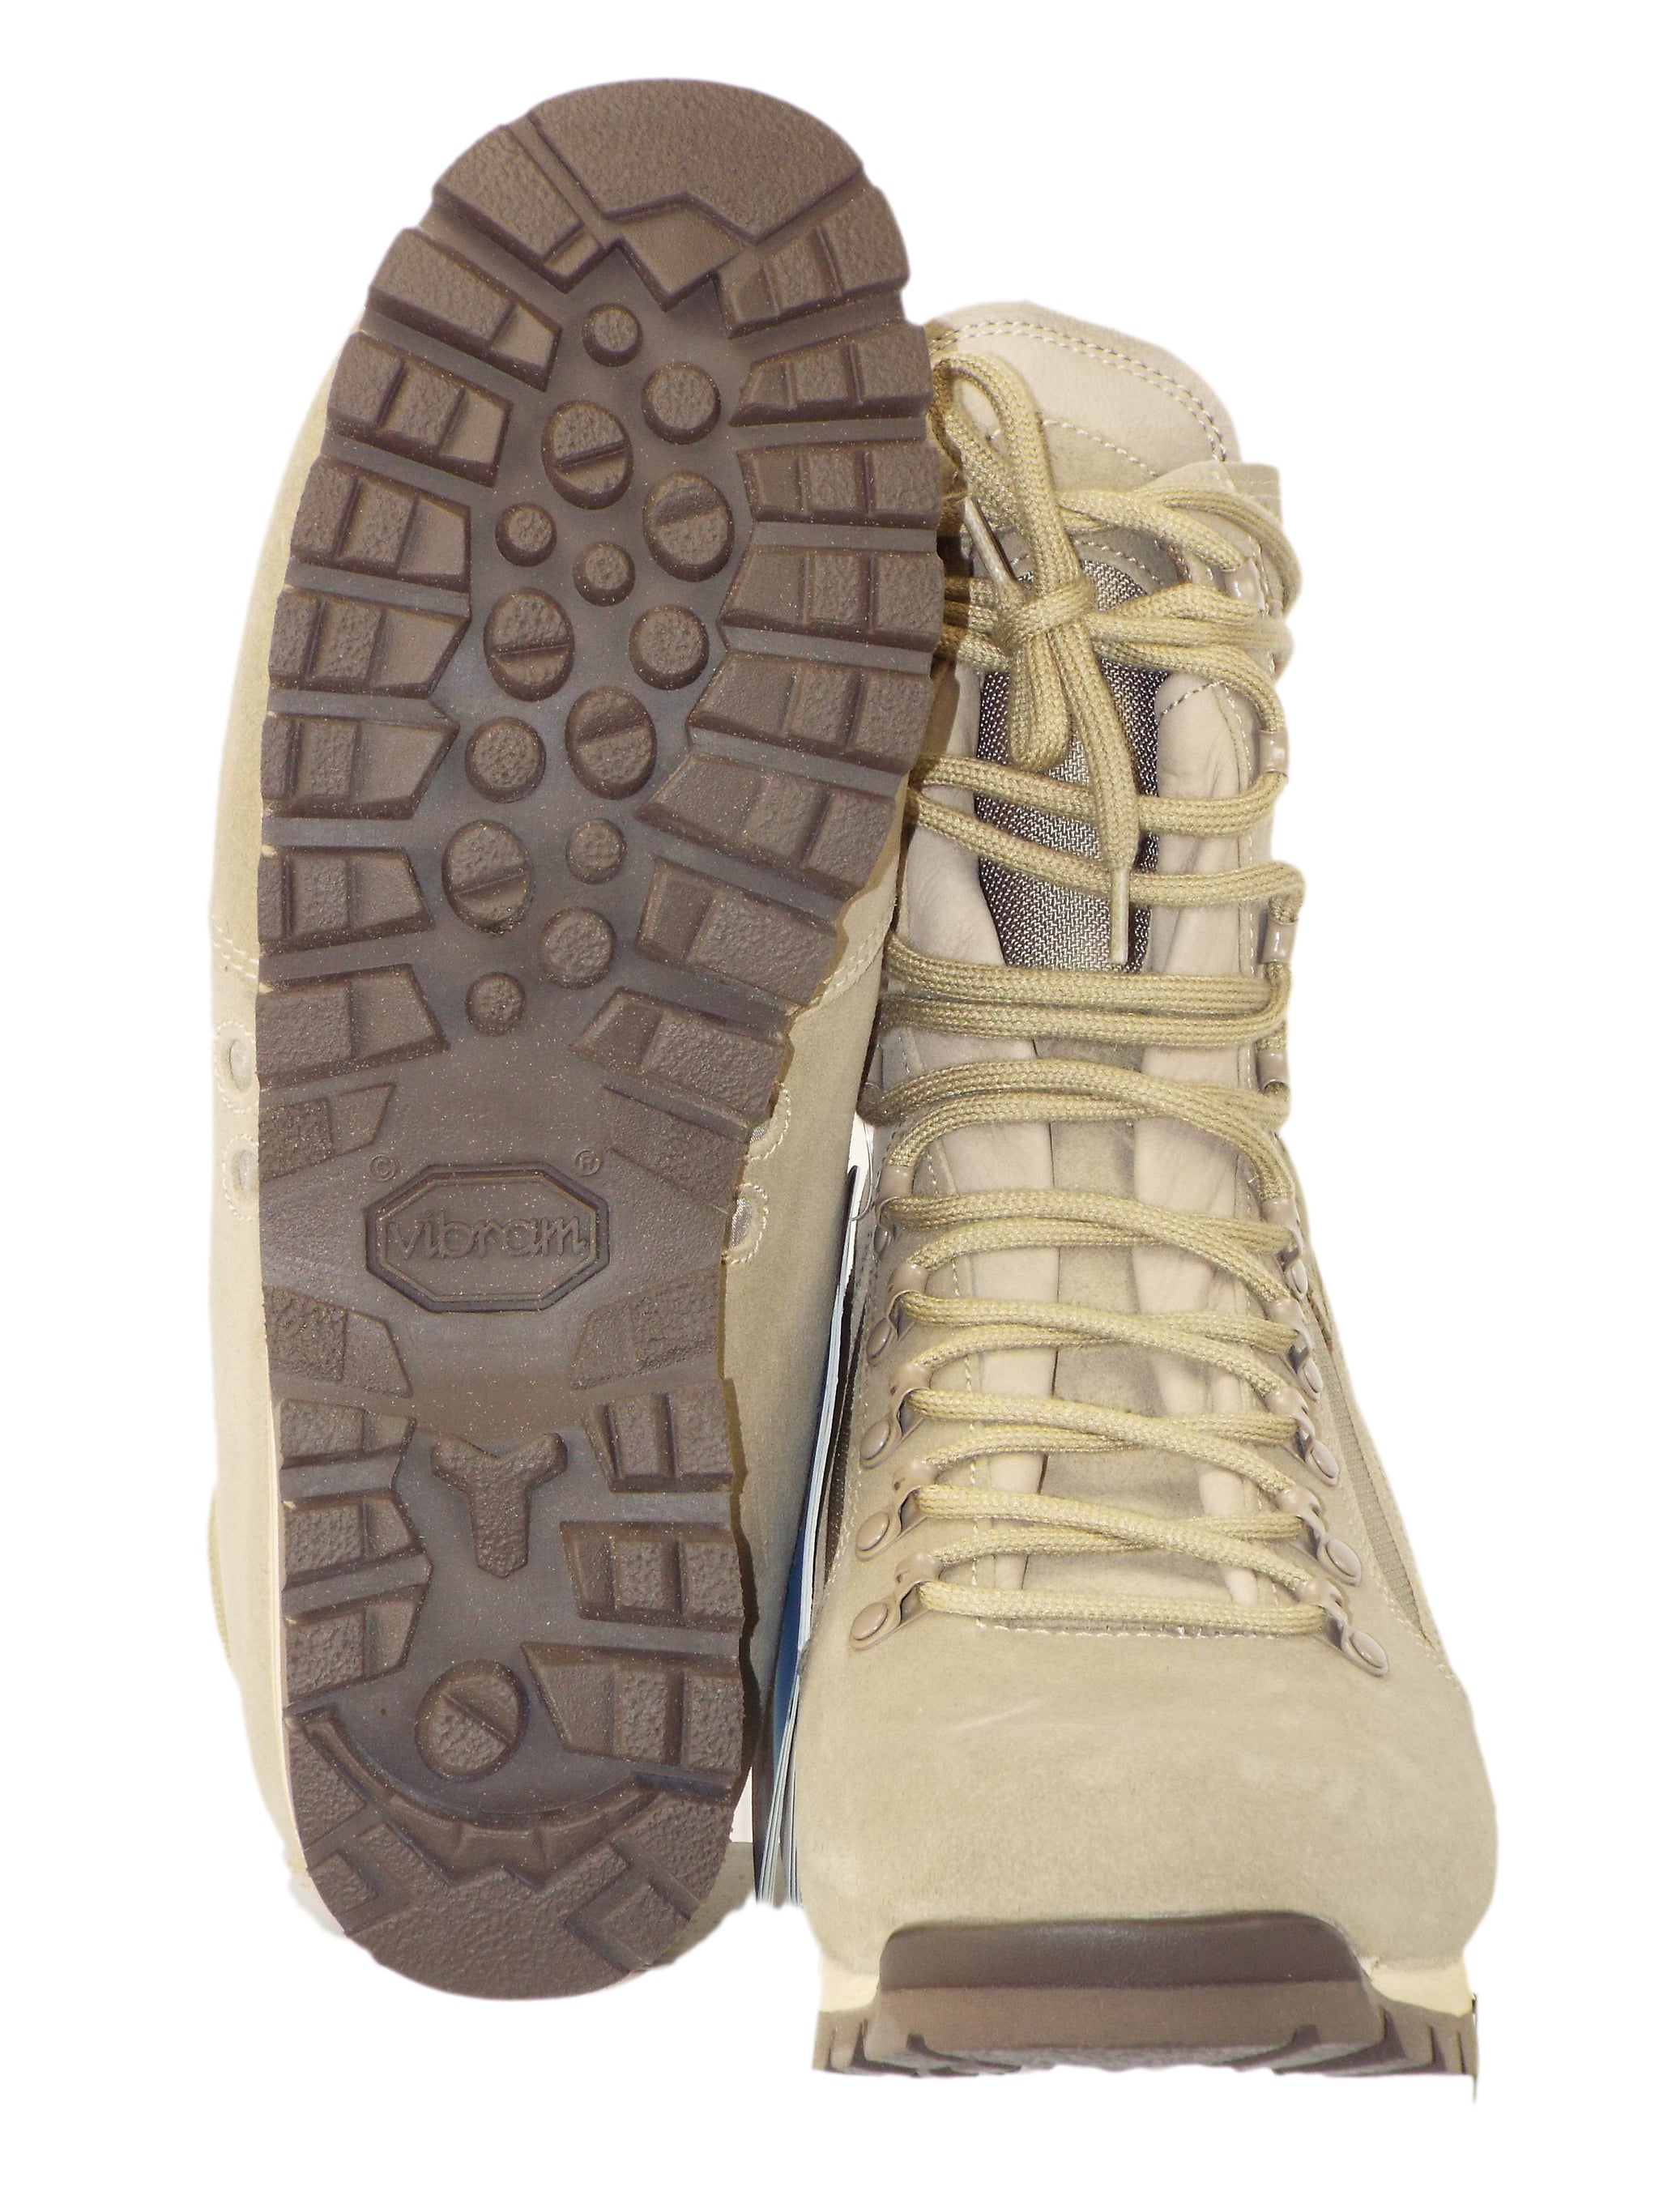 punt Harden schraper German - Meindl brand desert/jungle hiking boots - UK size 9½ only - n -  Forces Uniform and Kit